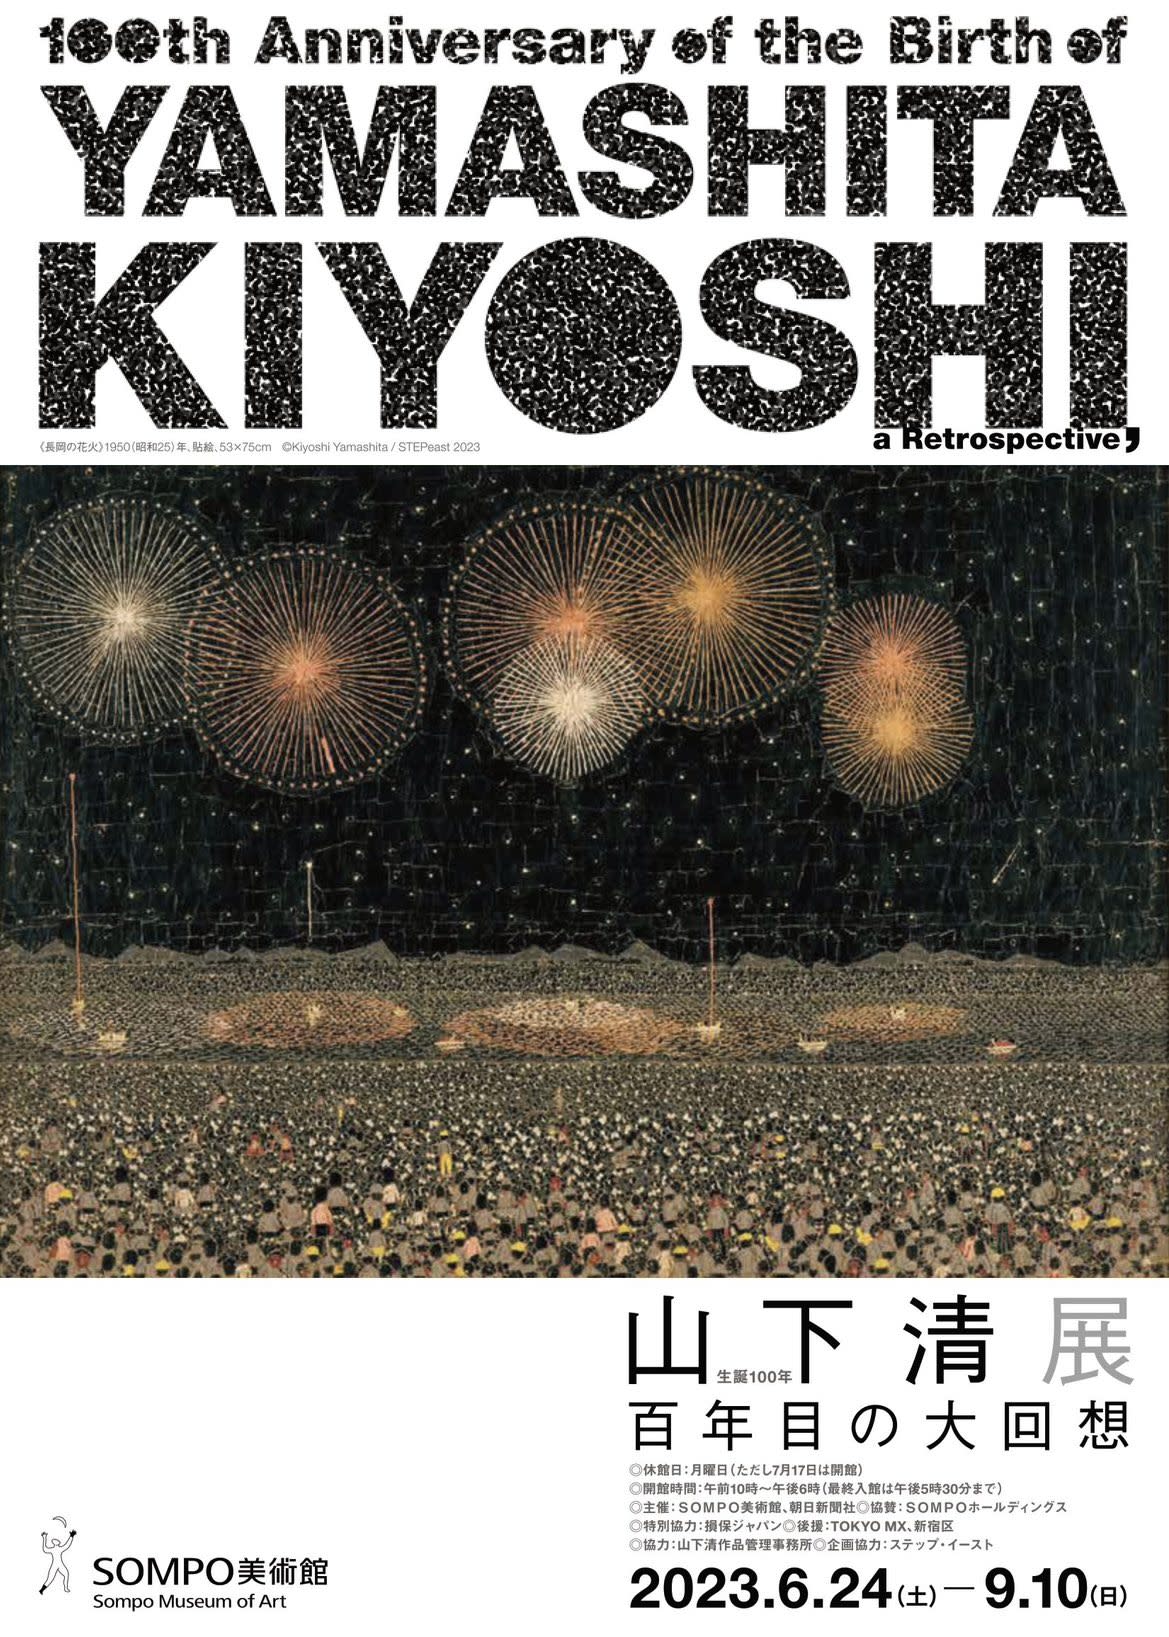 100th Anniversary of the Birth of Yamashita Kiyoshi, a 